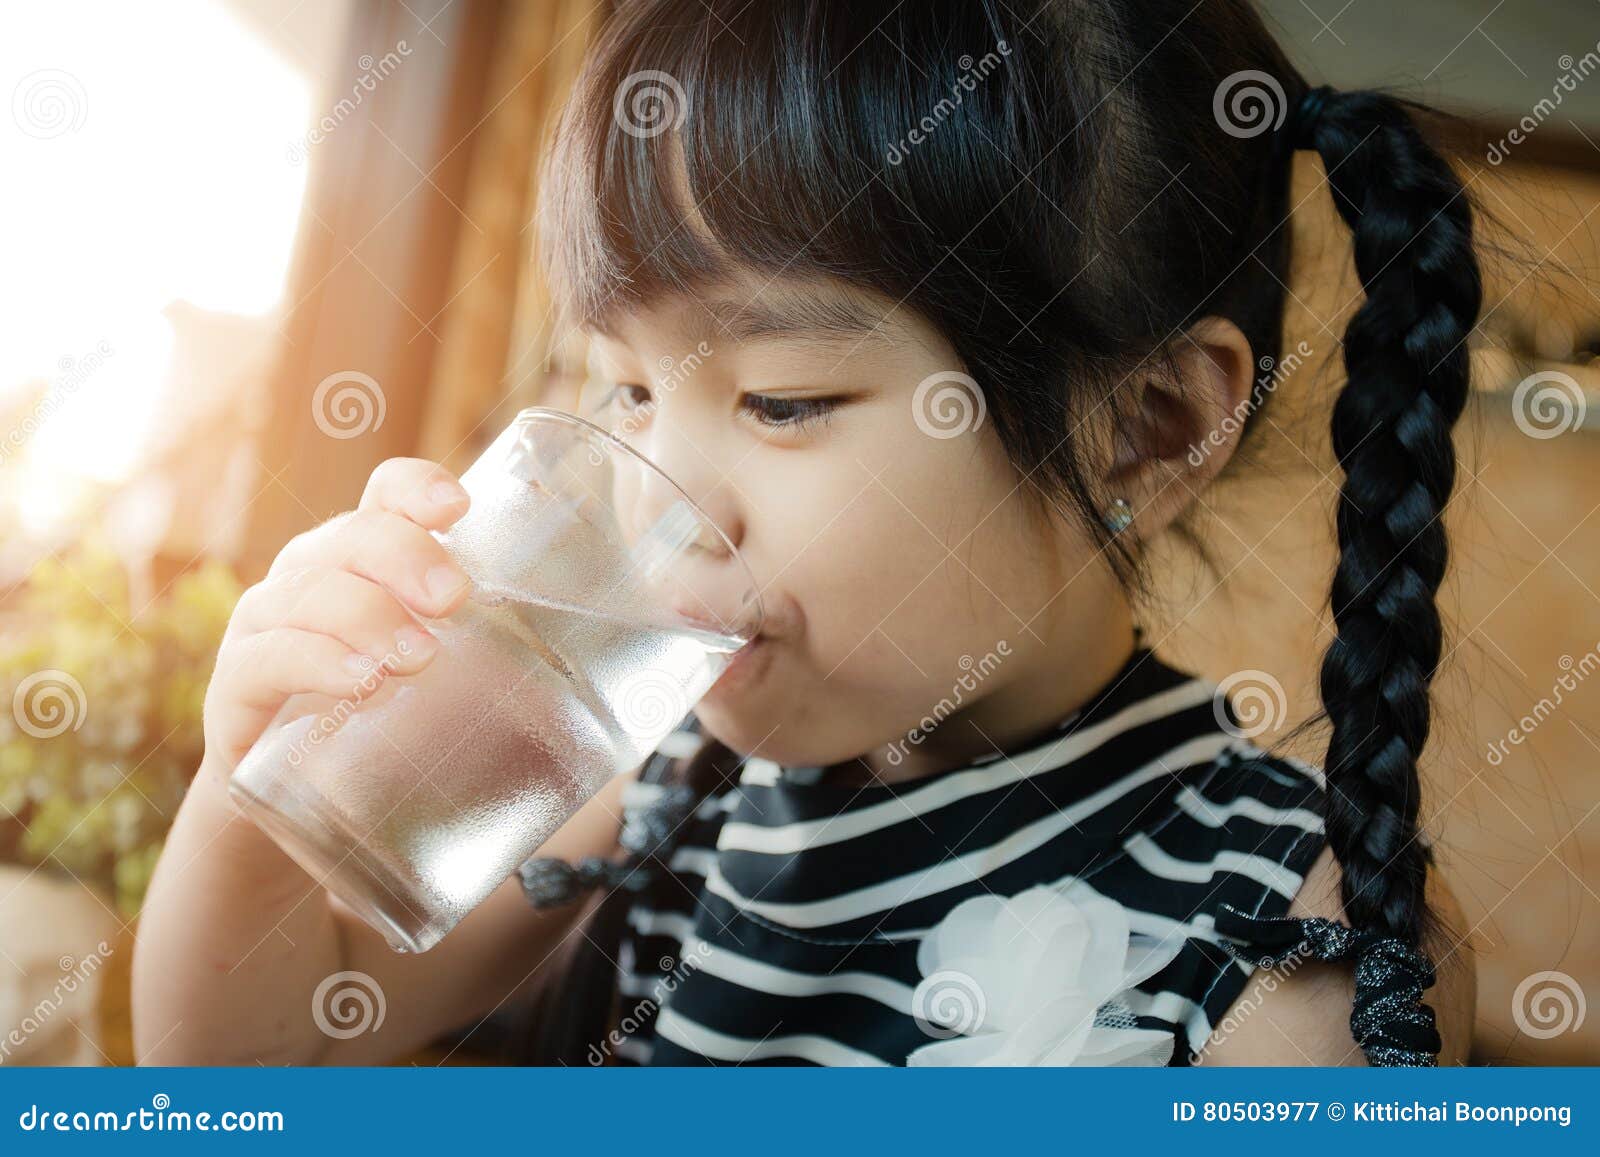 little girl drinking water.